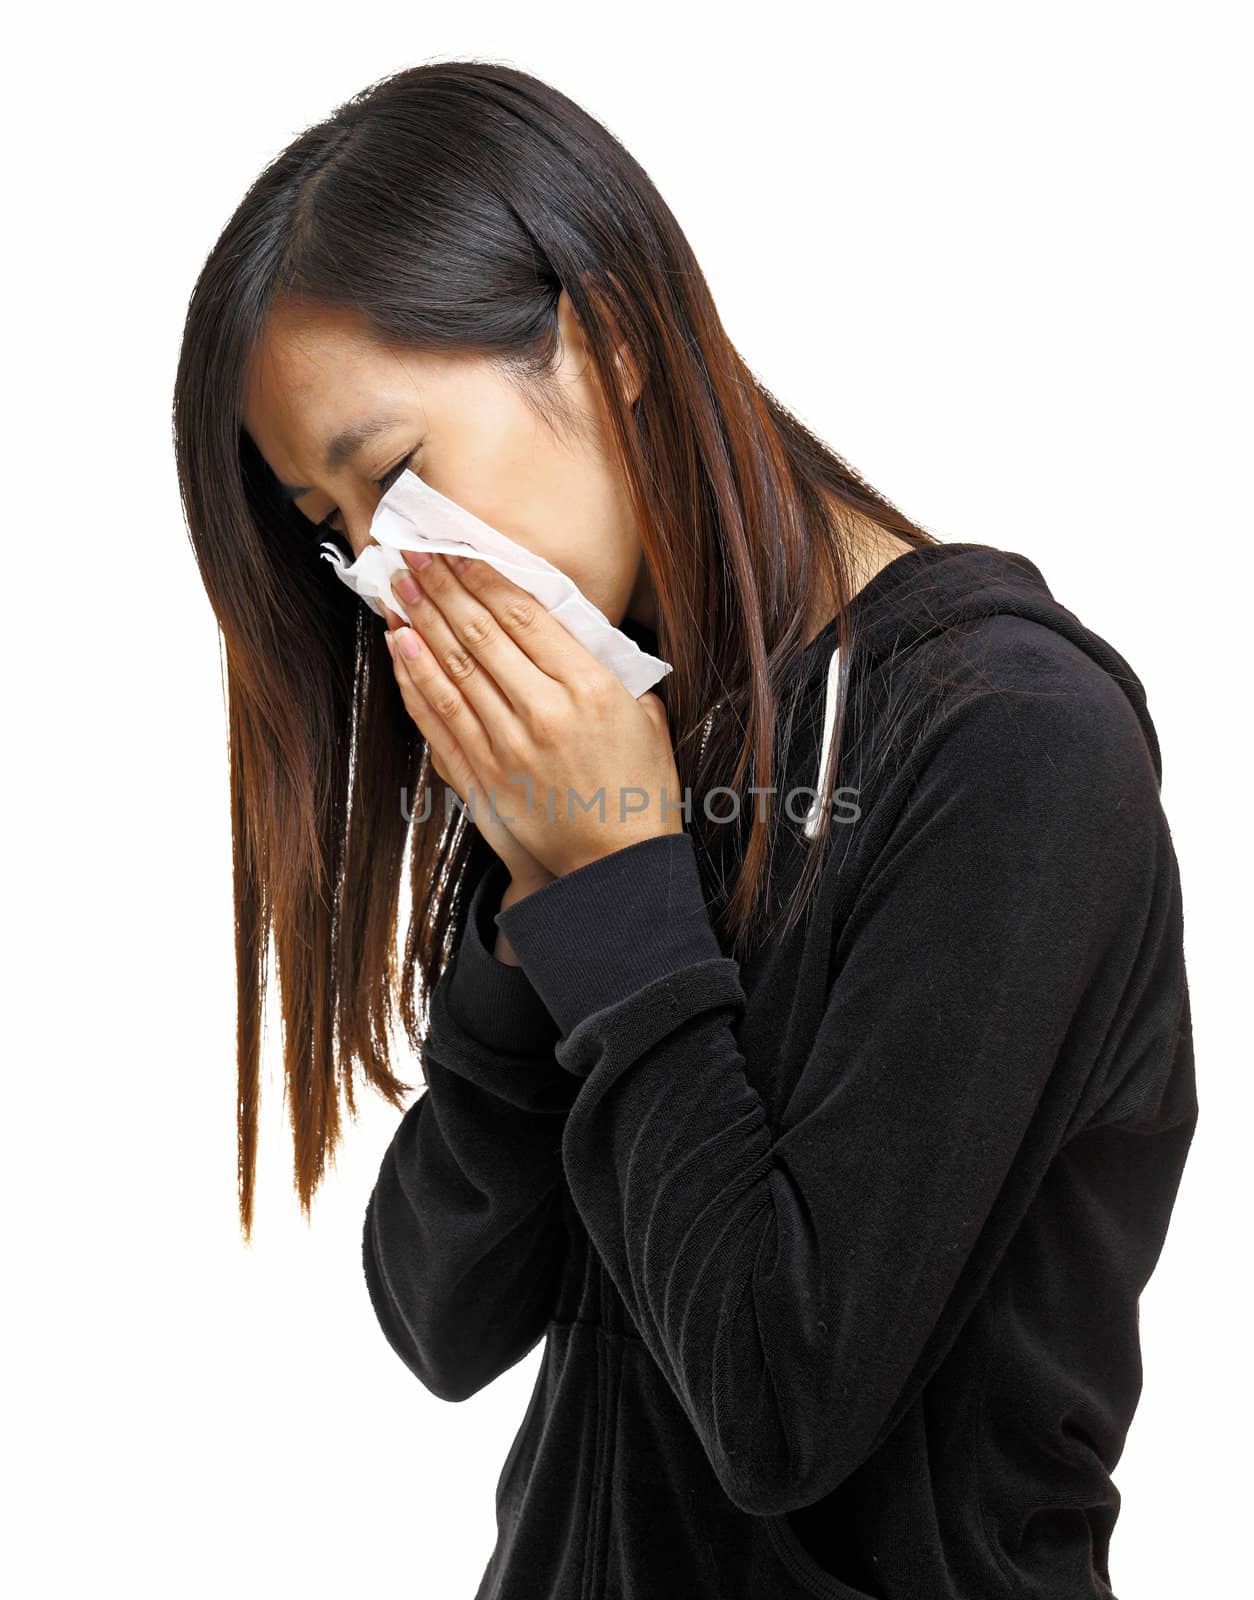 sneezing woman